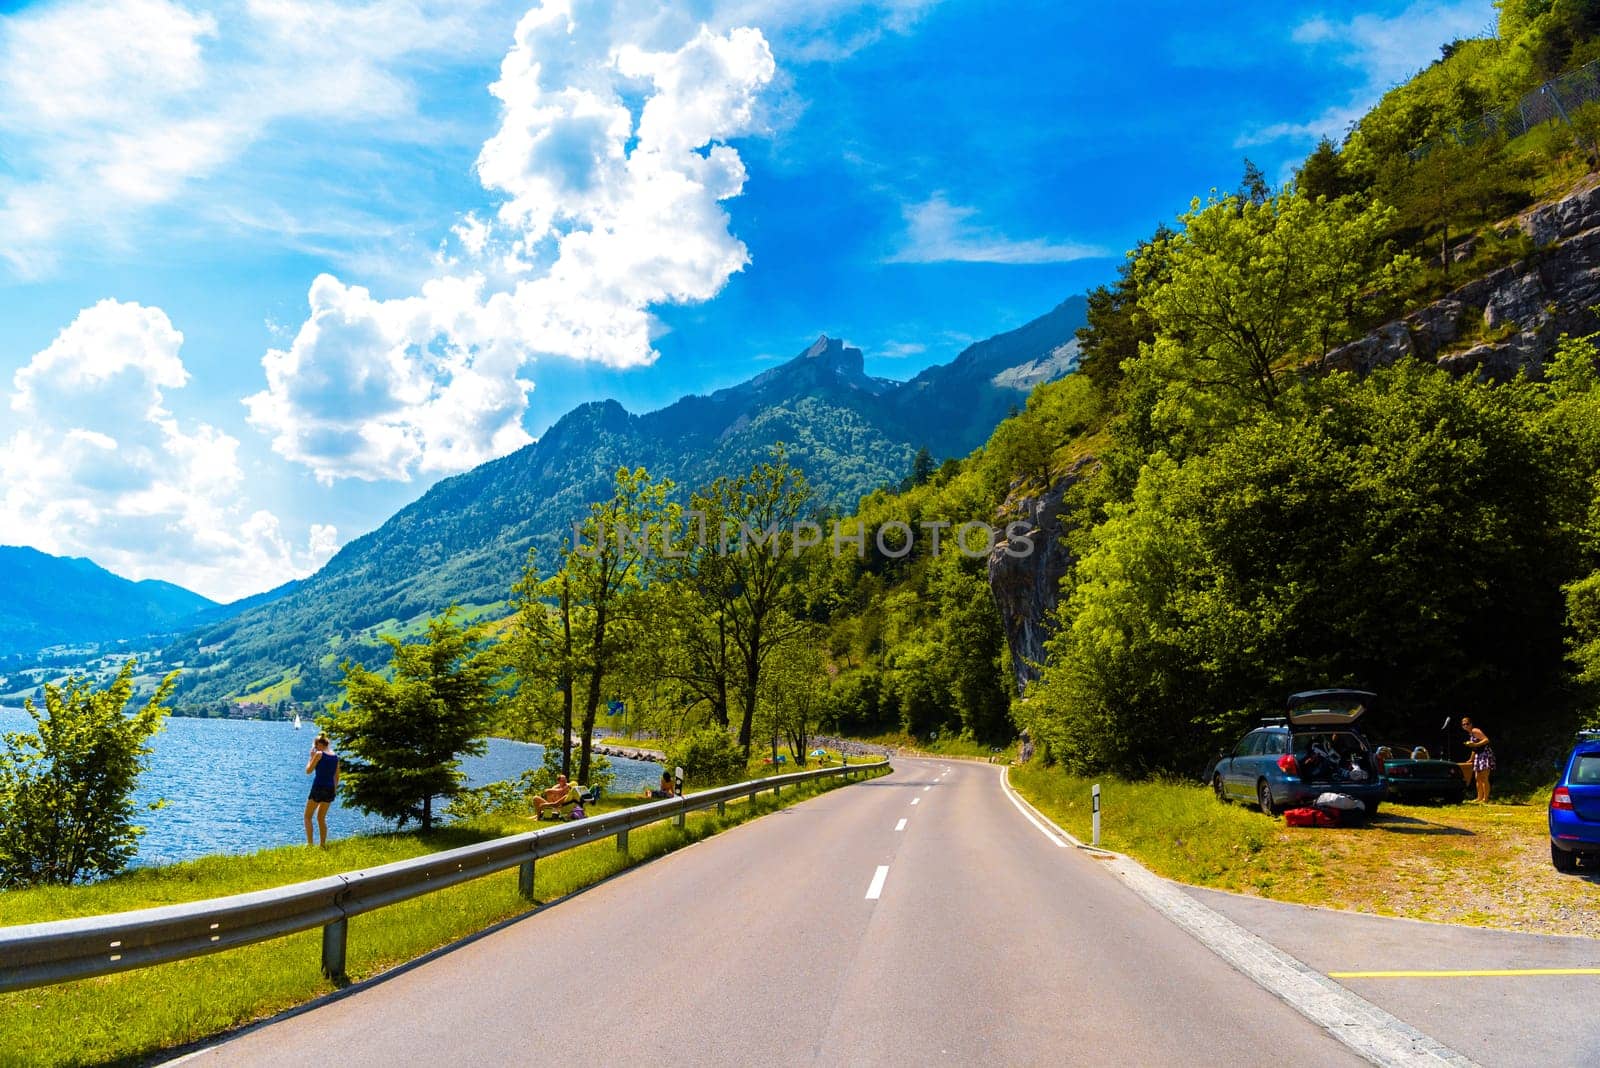 Road near the lake with mountains, Alpnachstadt, Alpnach Obwalden Switzerland by Eagle2308